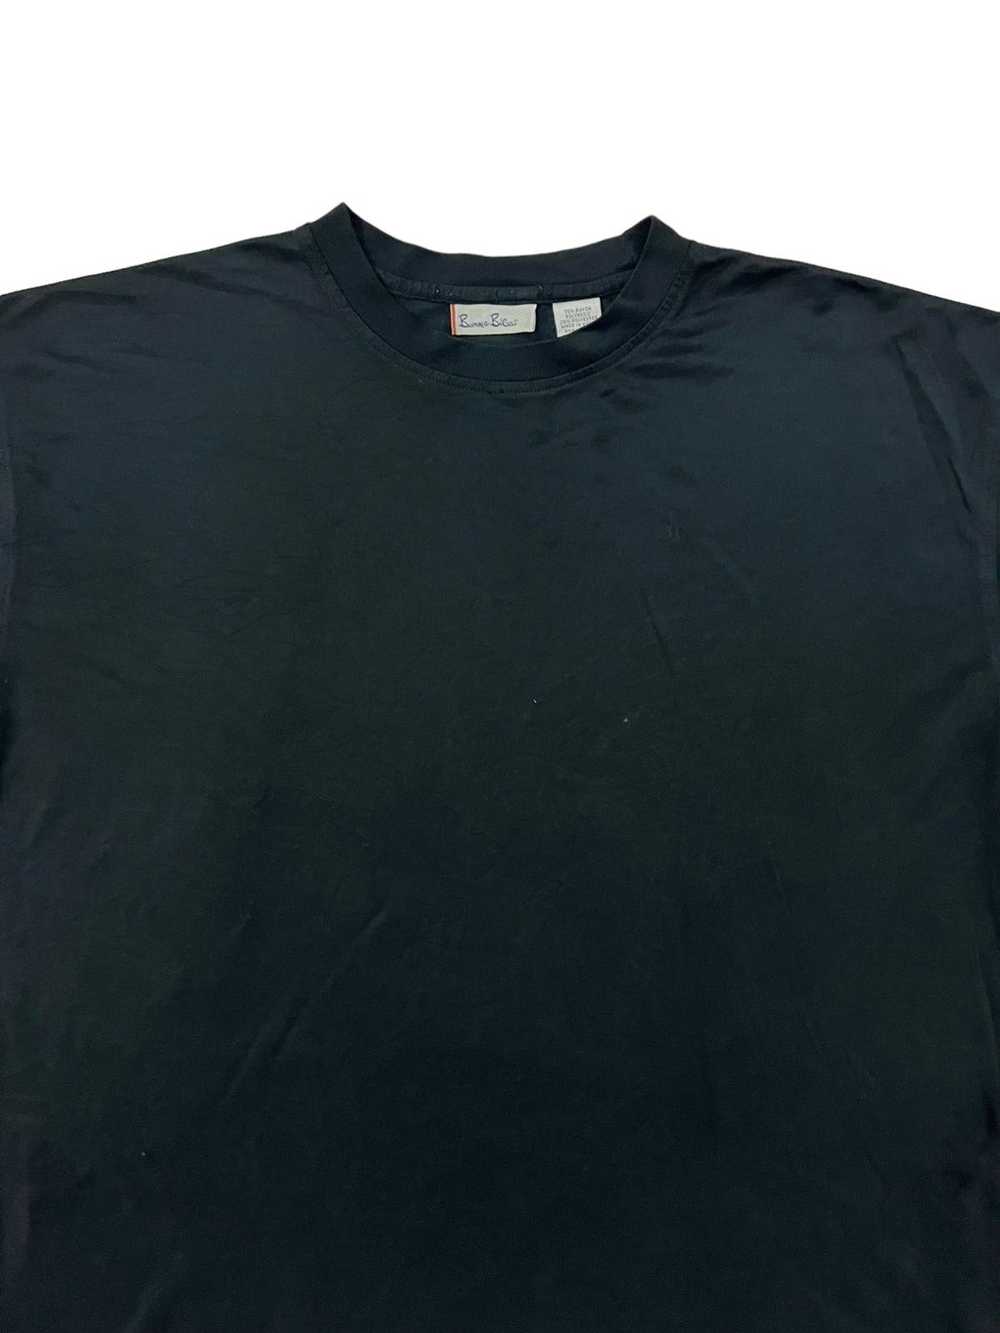 Burma Bibas Burma Bibas T-shirt Size M -Black- - image 2